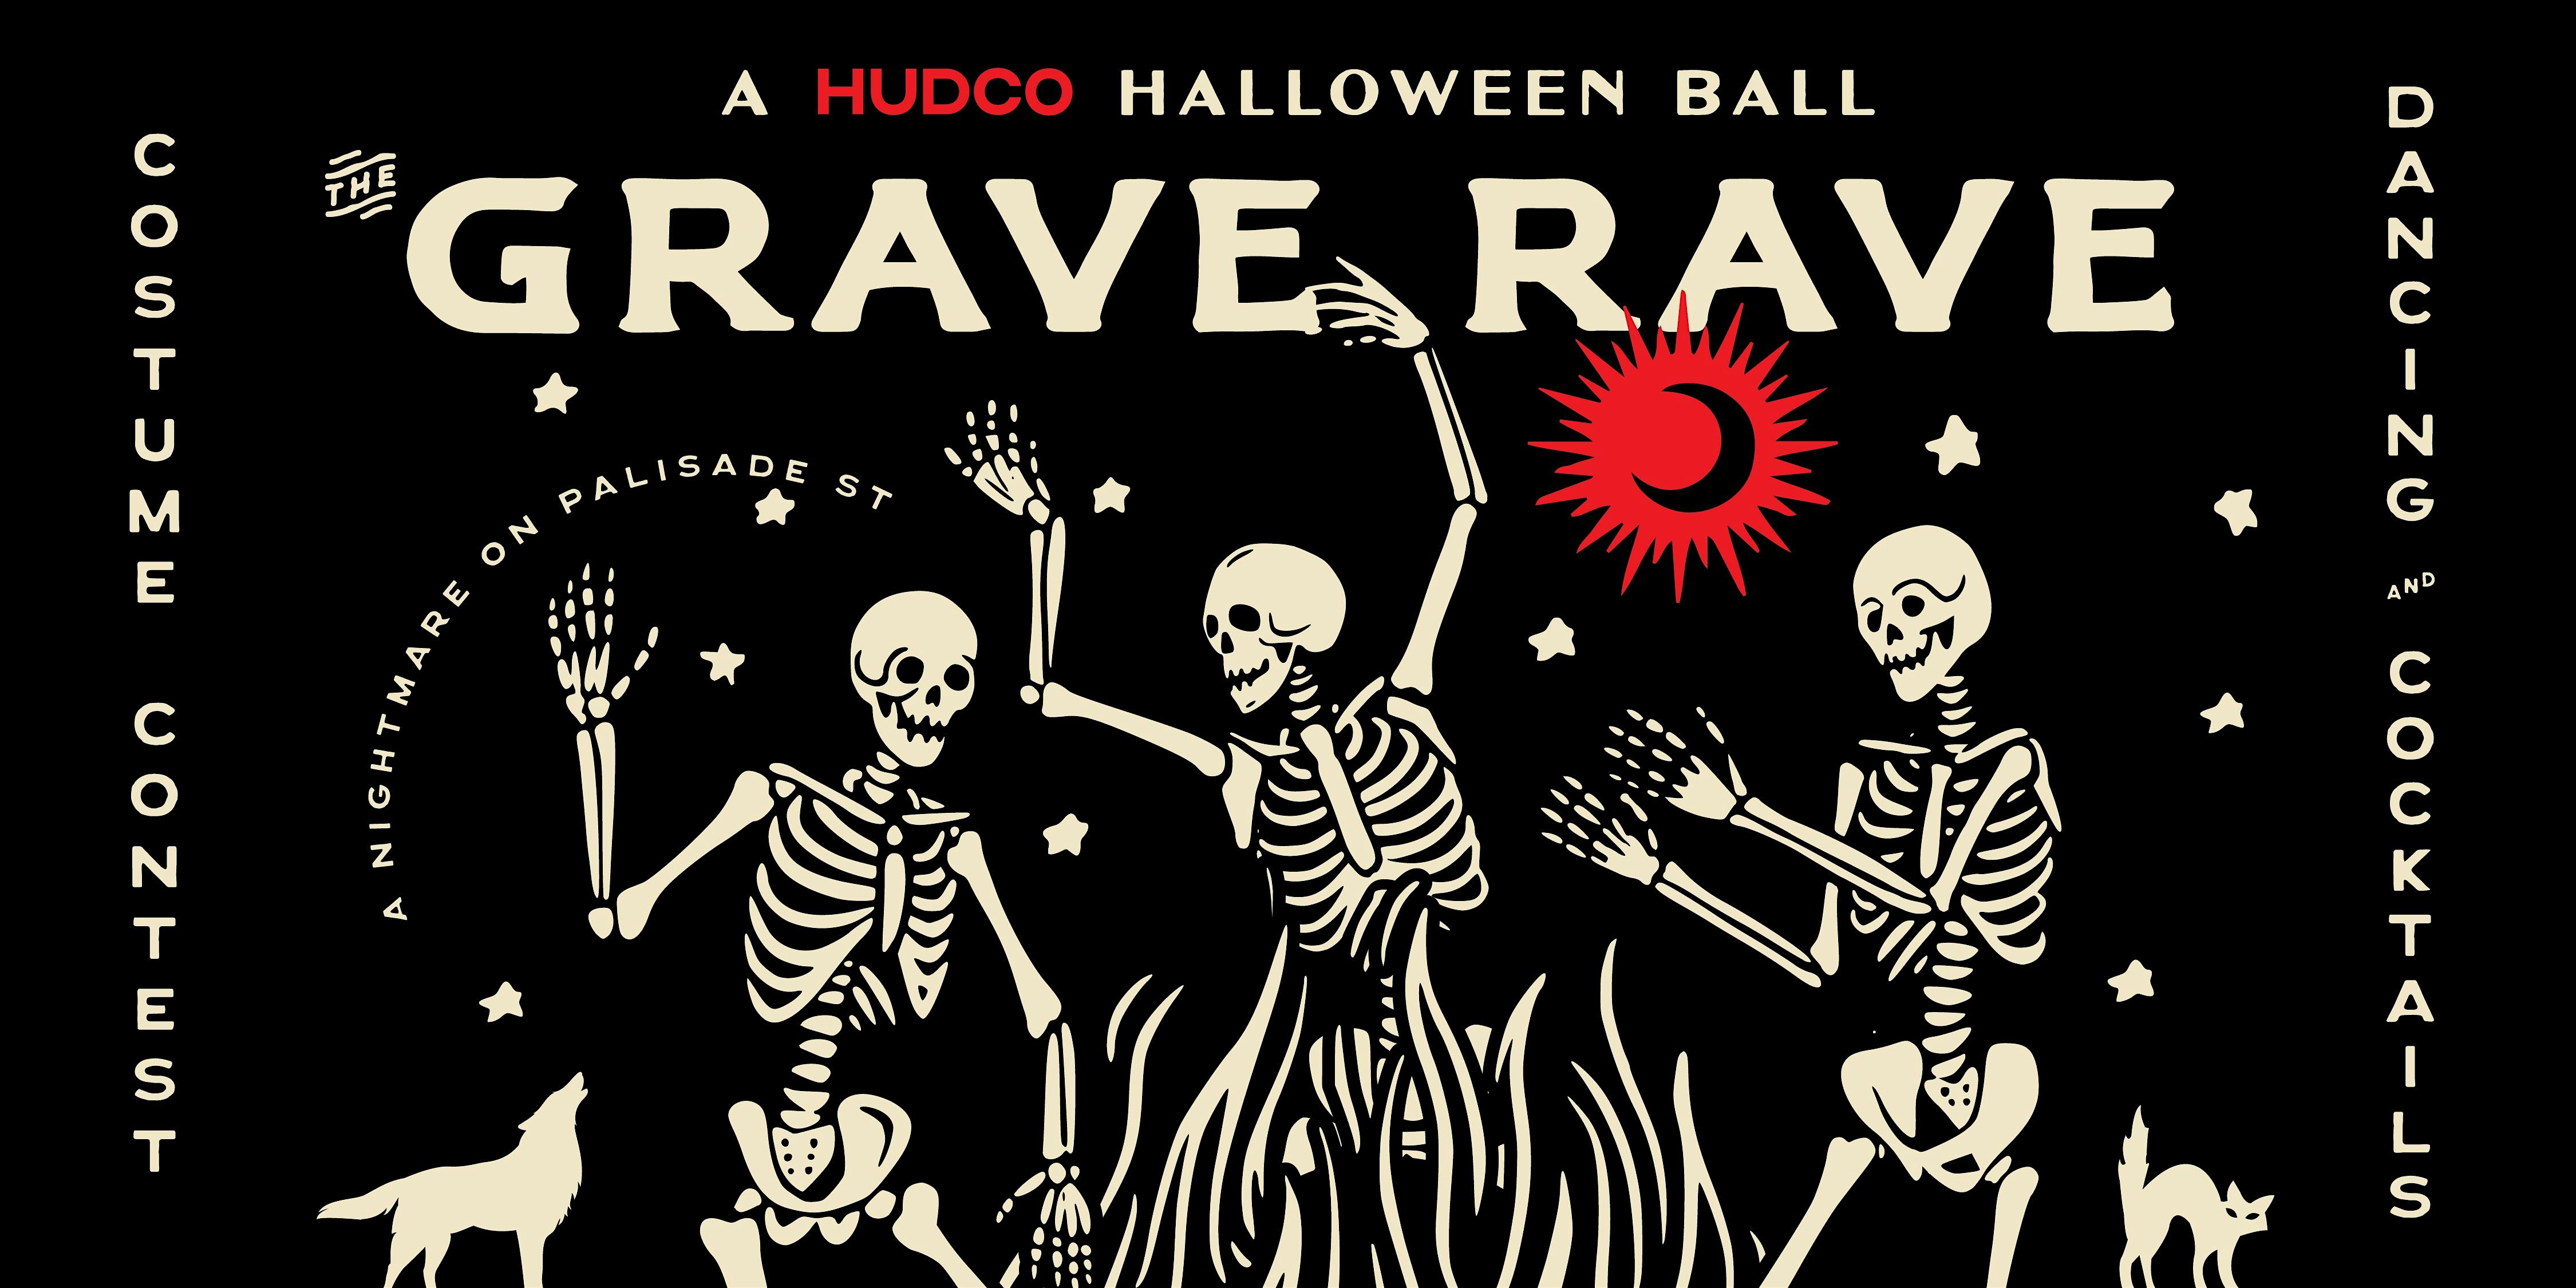 The Grave Rave: A HudCo Halloween Ball